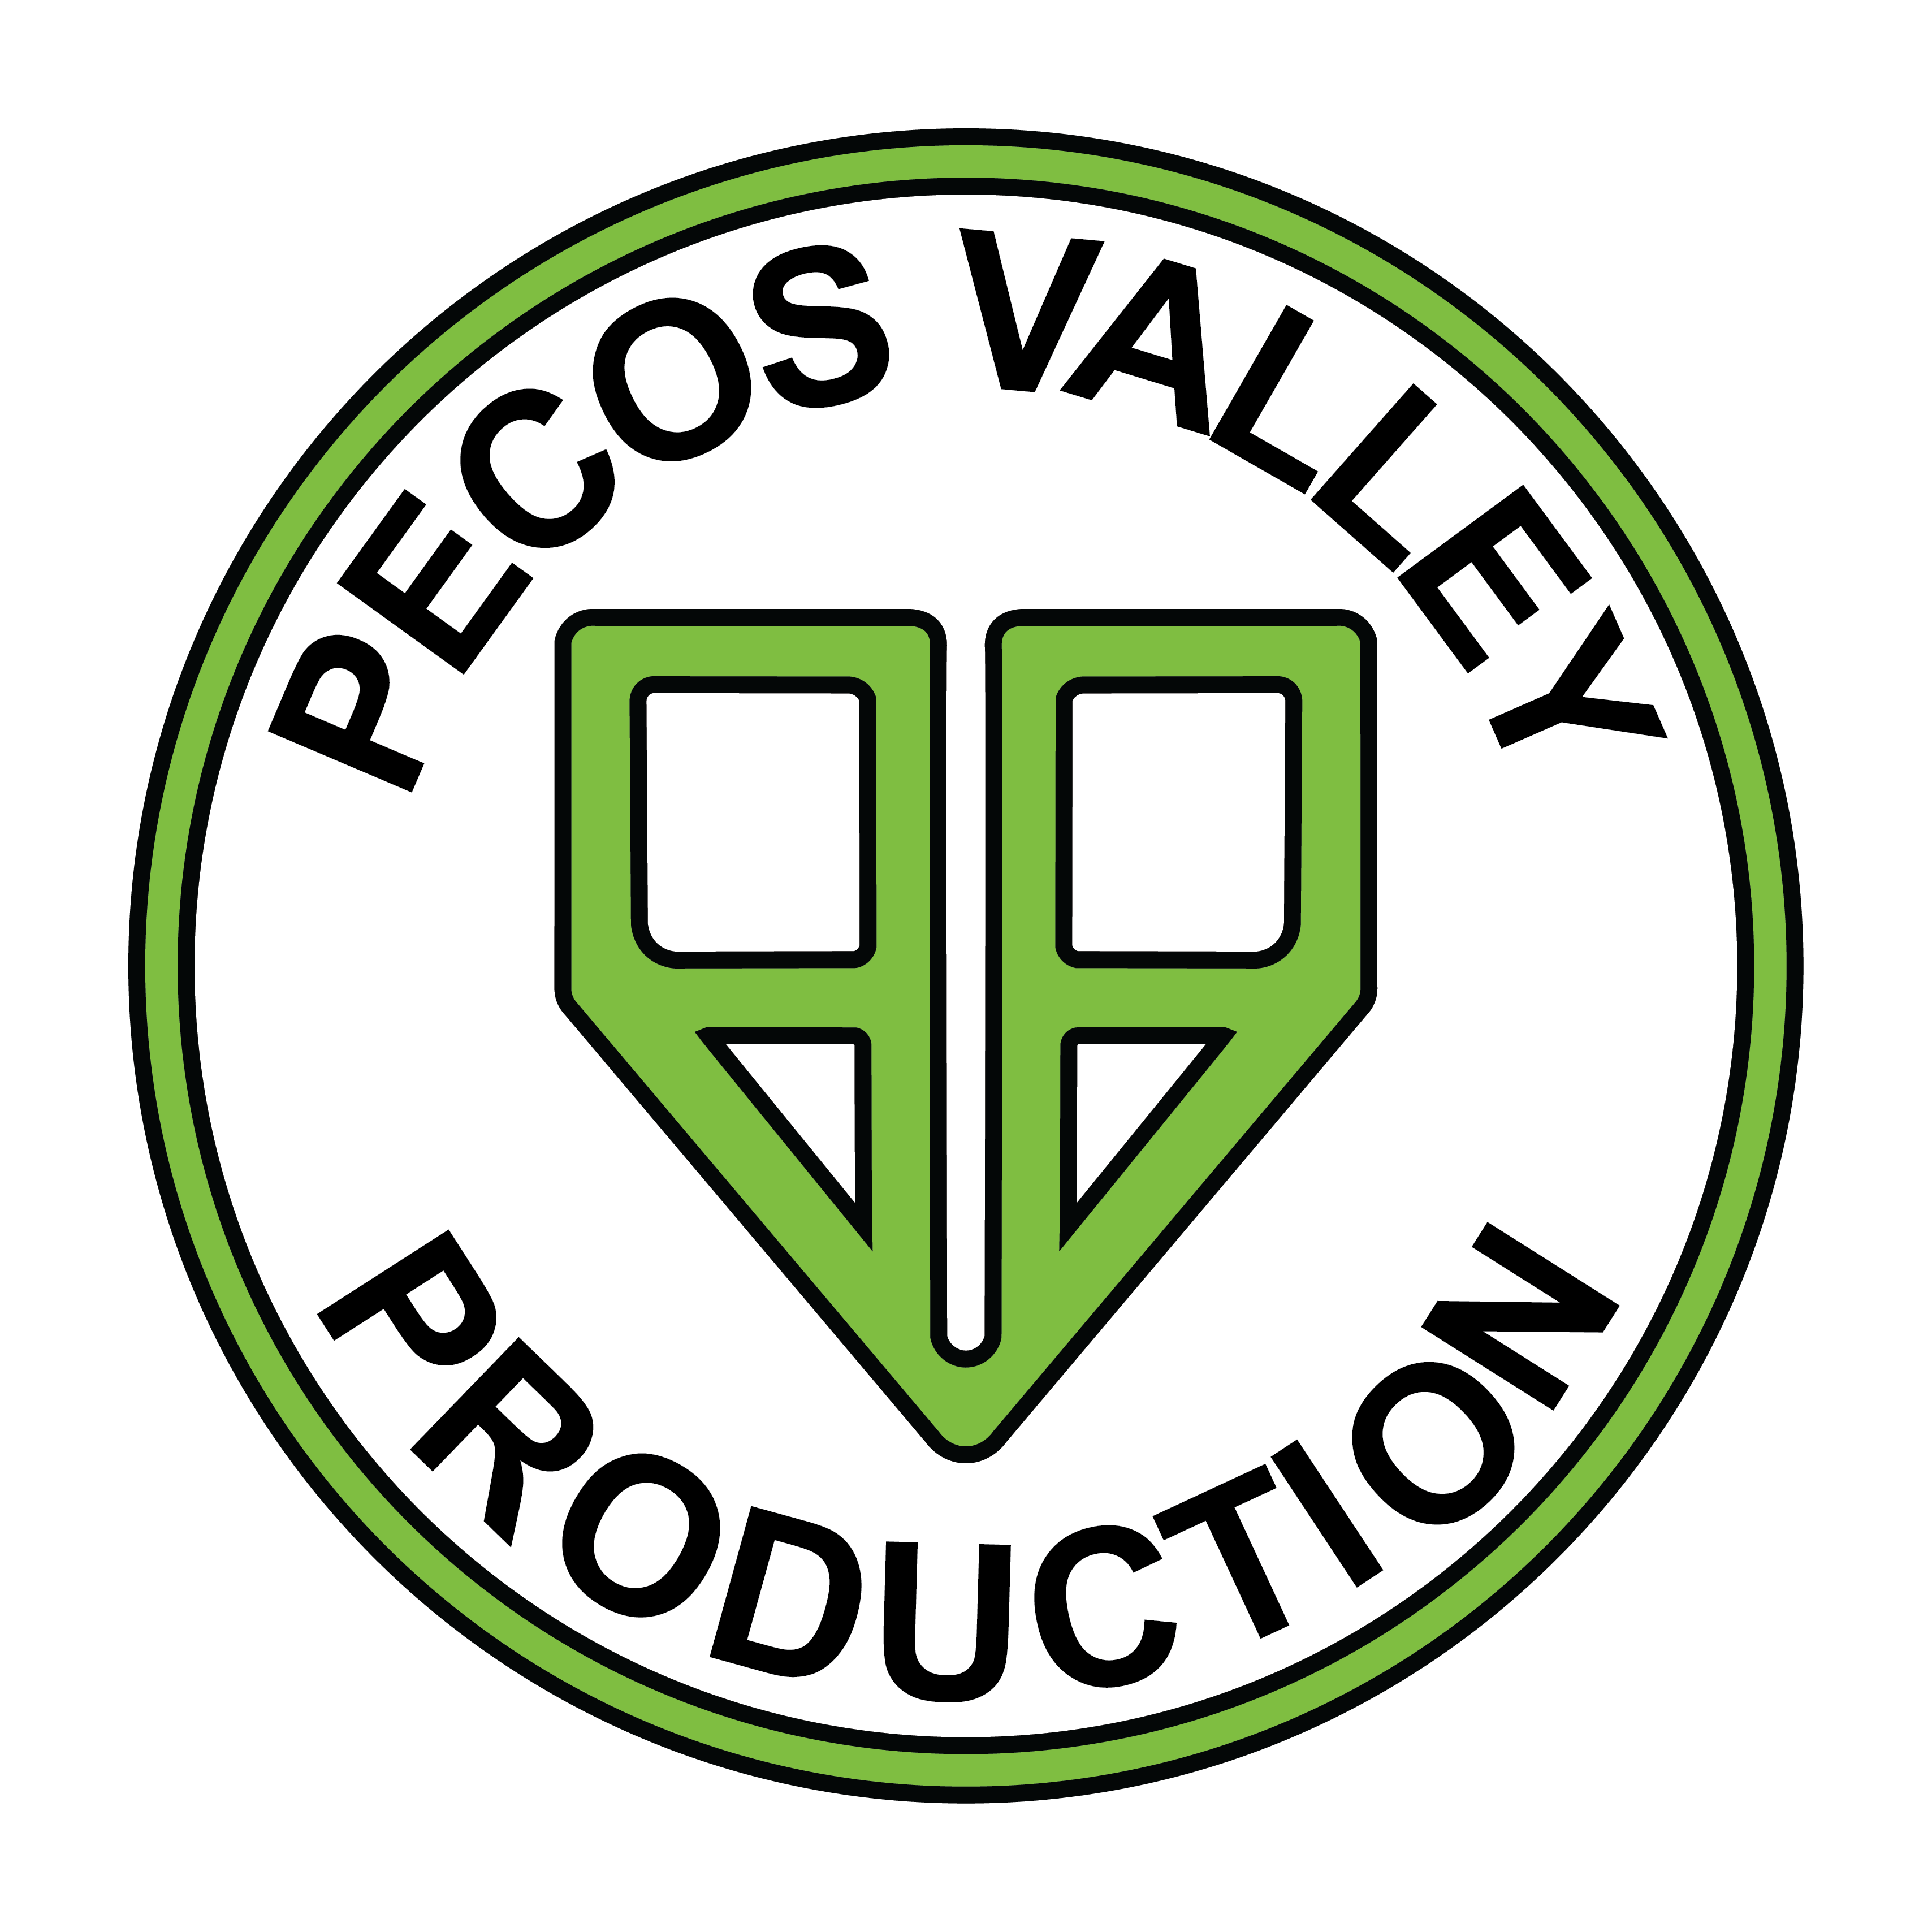 Pecos Valley Production Hobbs - Navajo logo